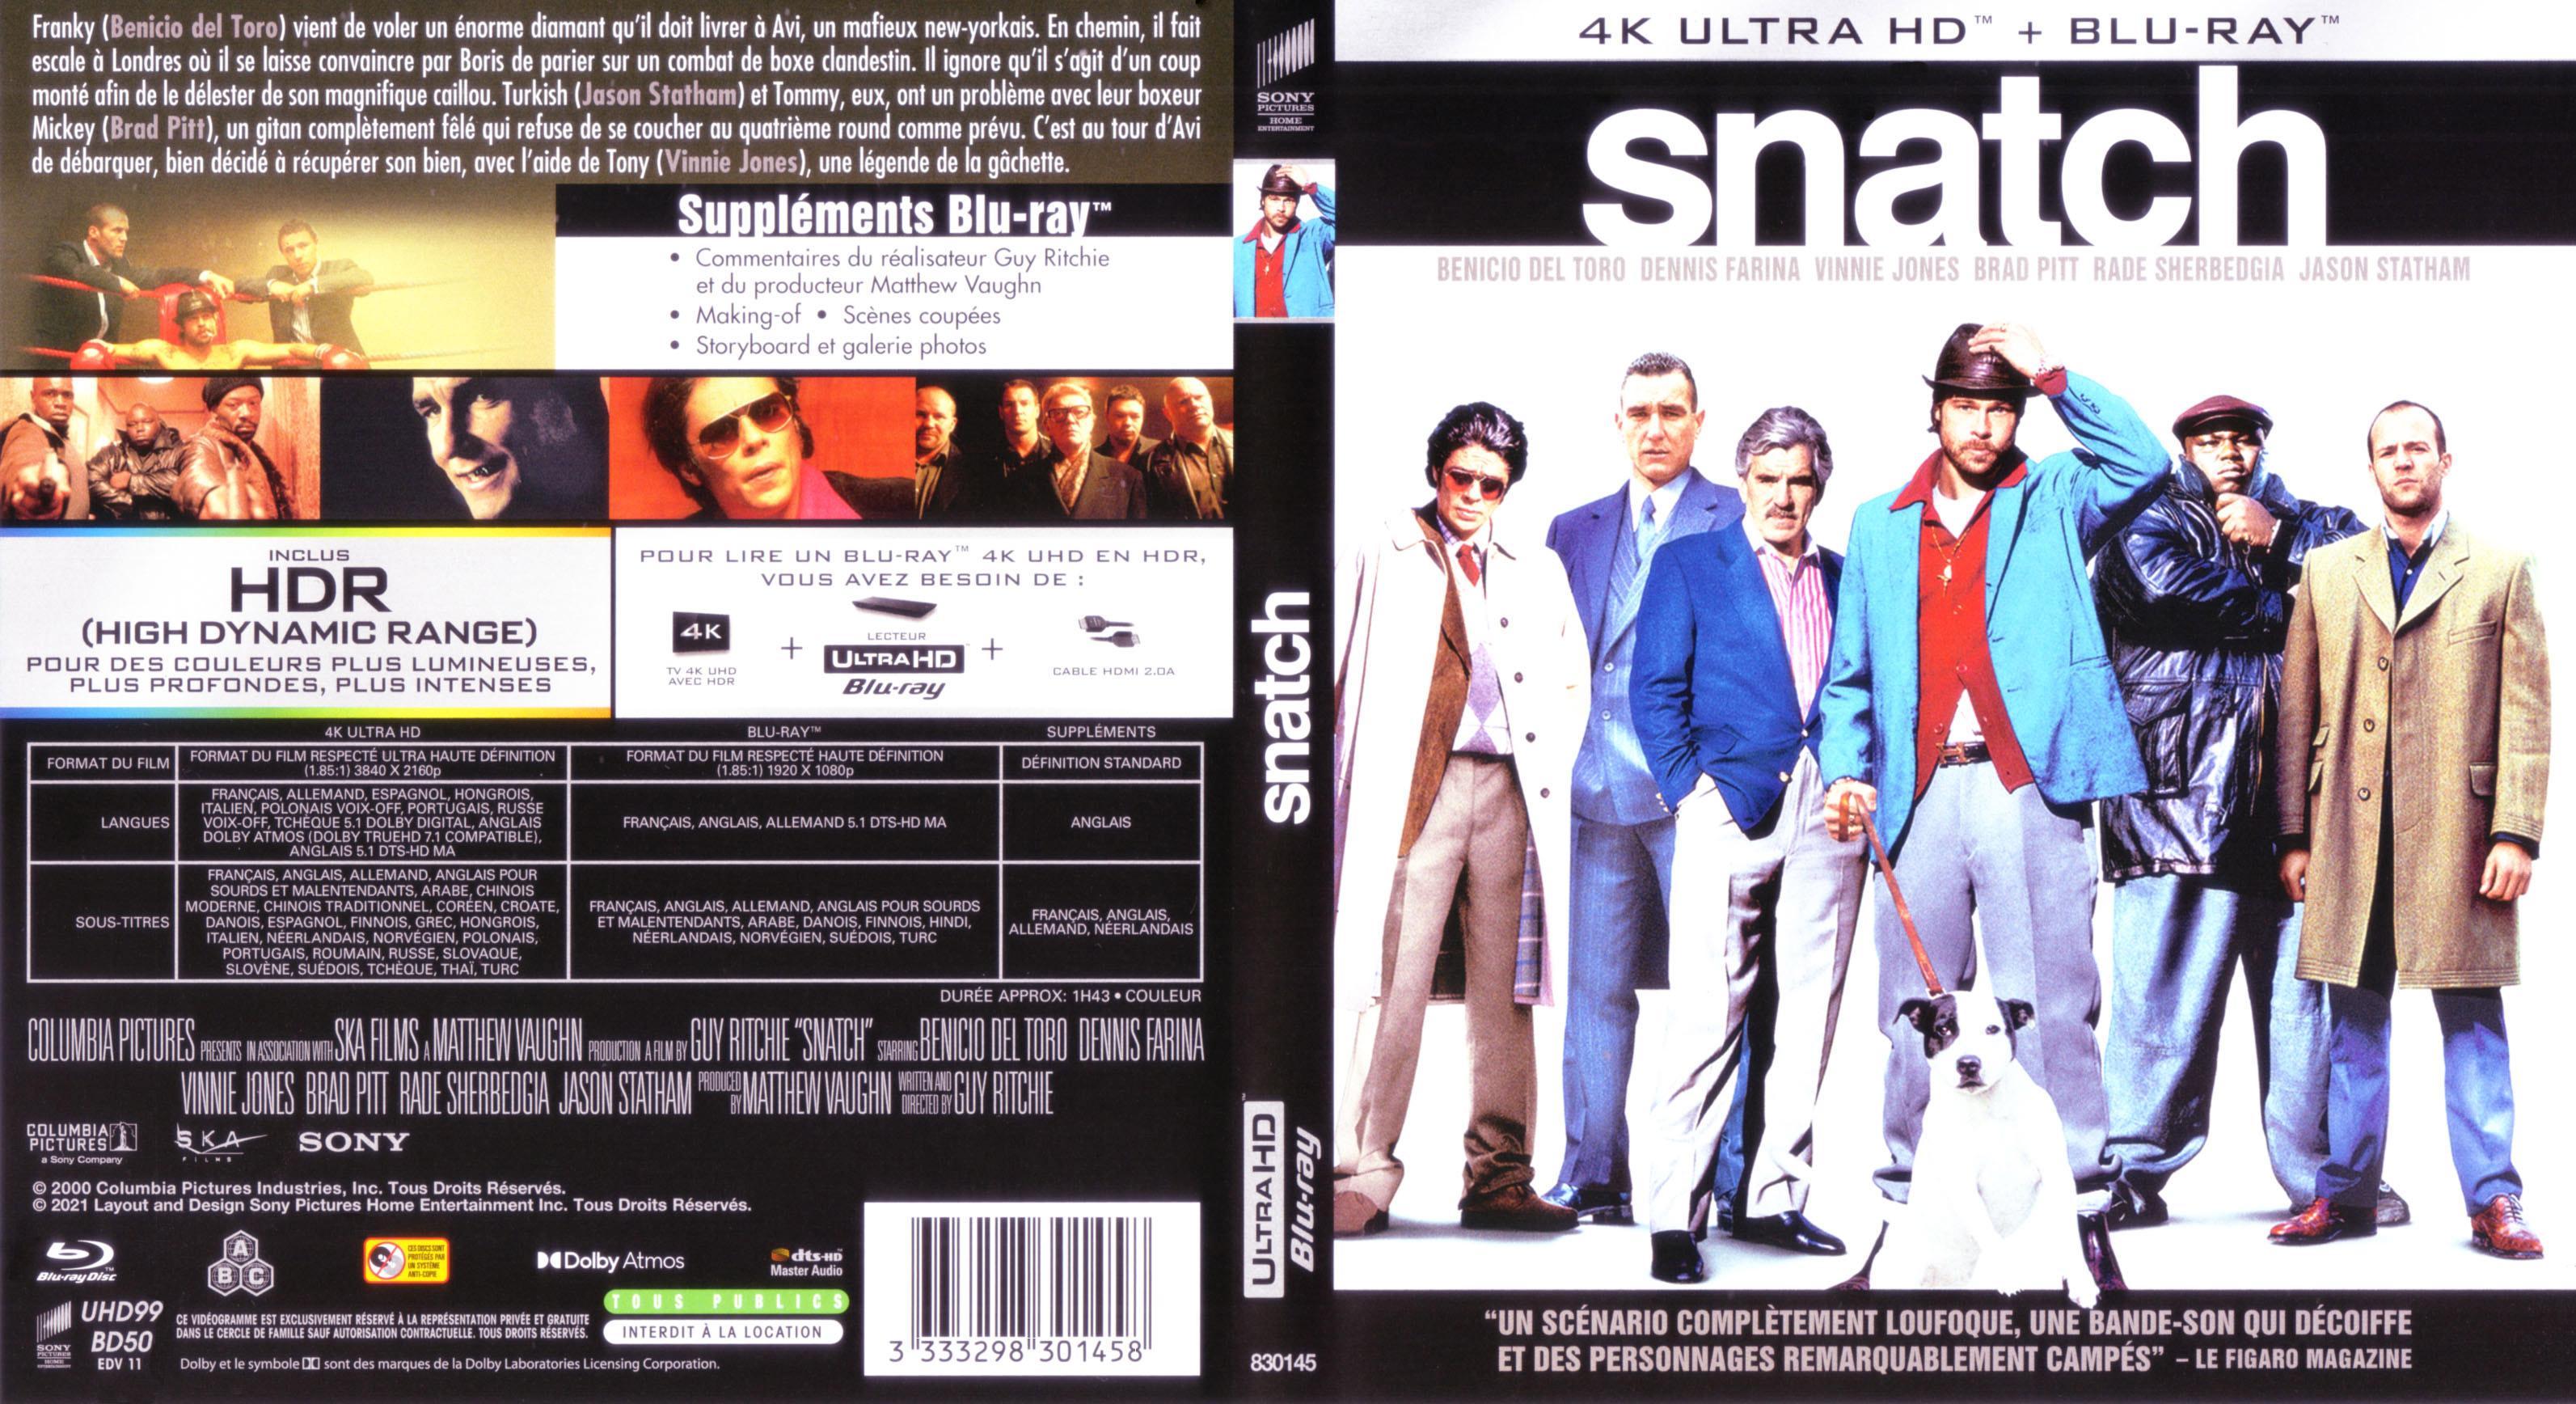 Jaquette DVD Snatch 4K (BLU-RAY)